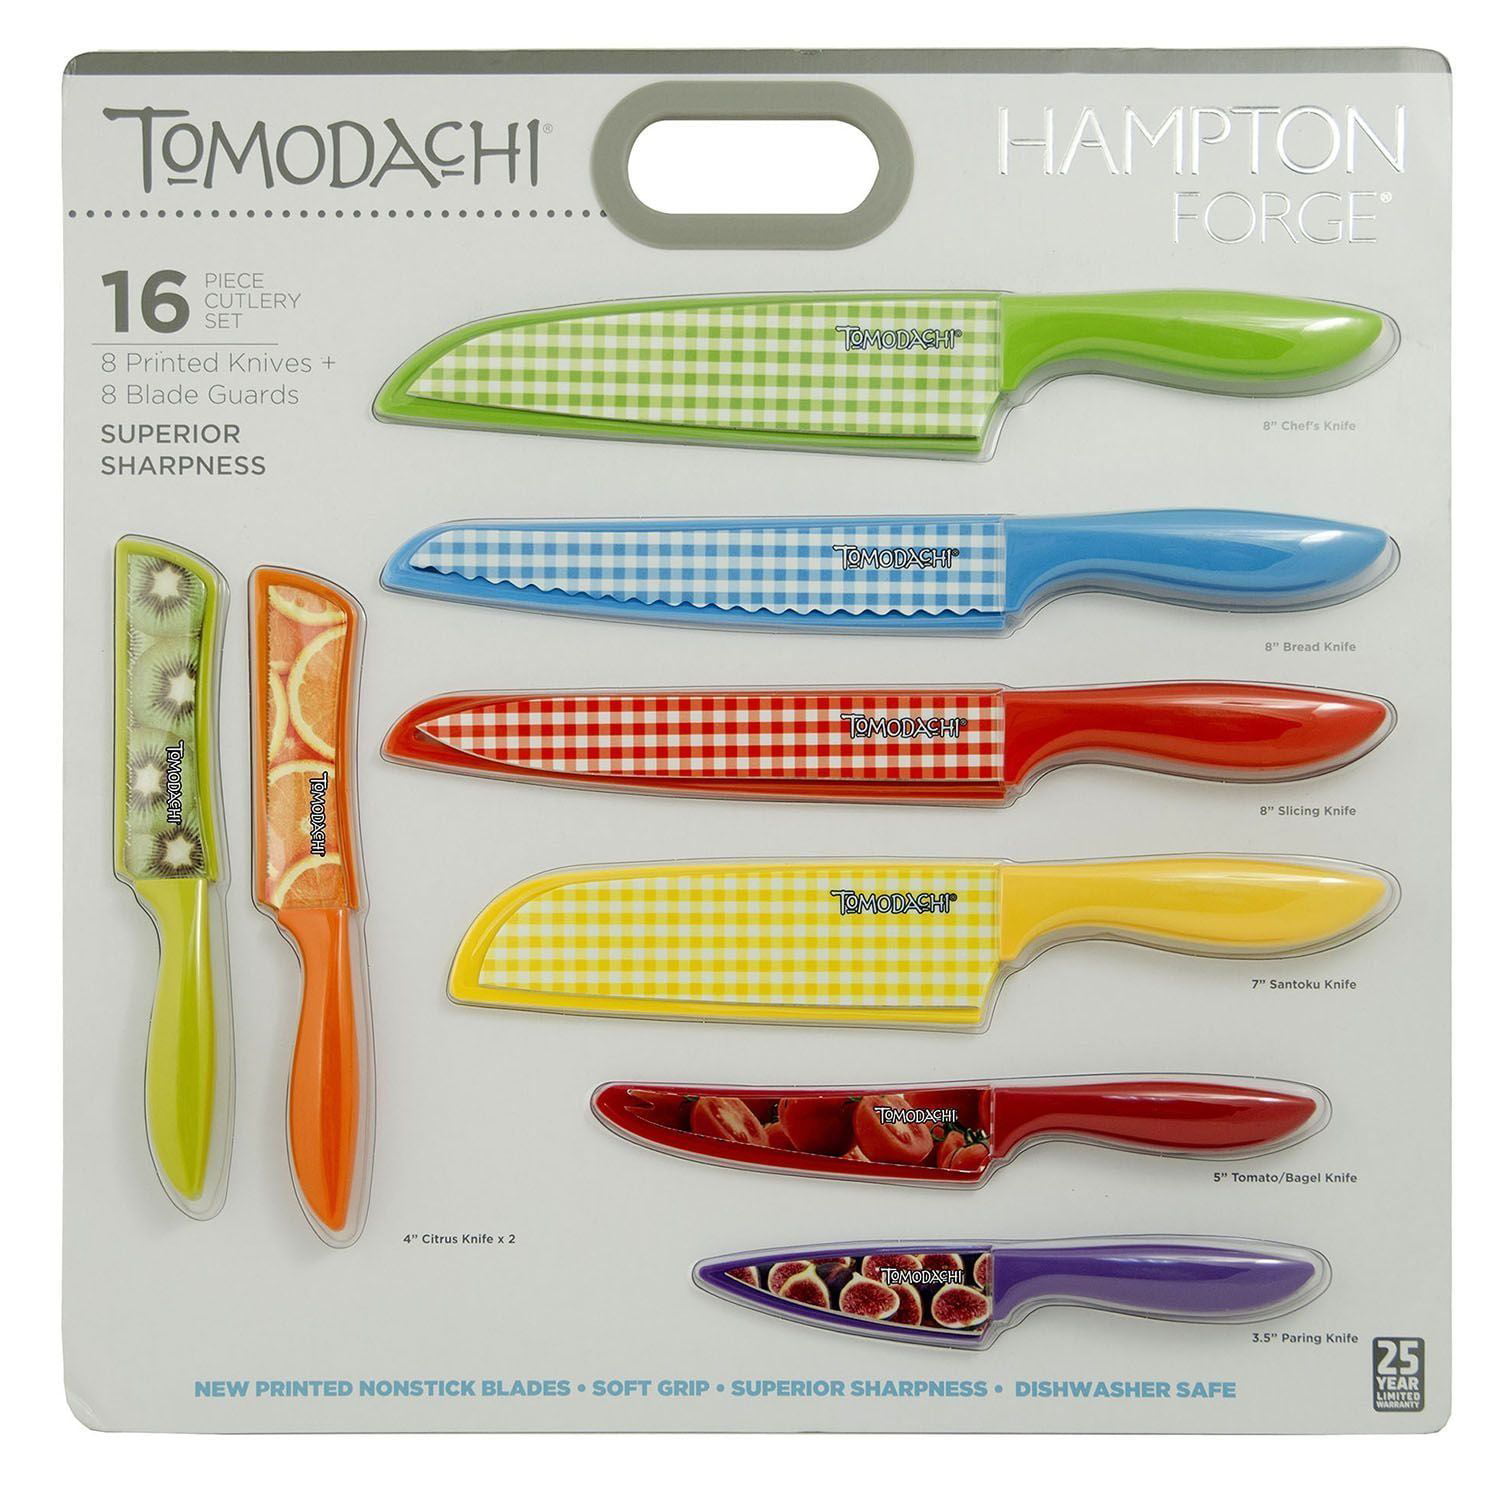 Hampton Forge Tomodachi 10 Piece Knife Block Set #Review (One word